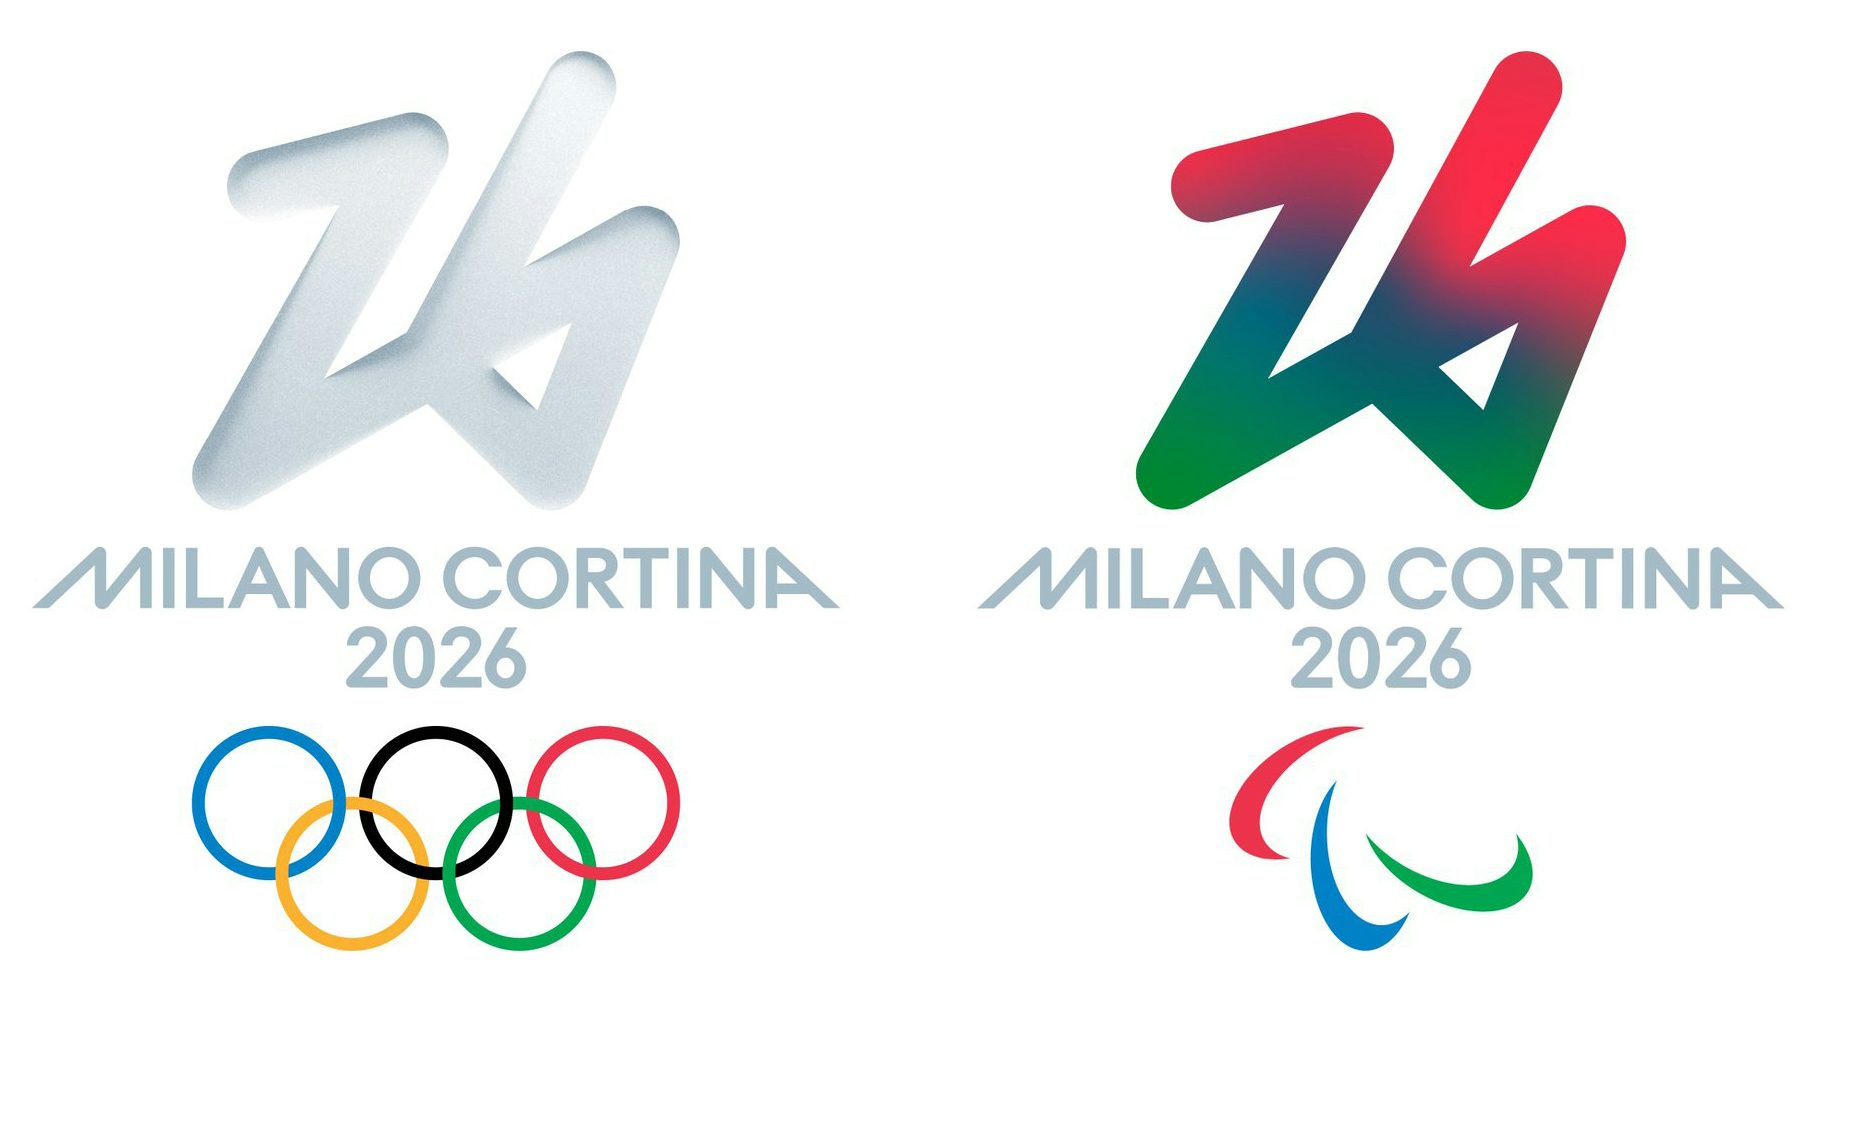 Milano Cortina 2026 Winter Olympics logo revealed | Search by Muzli